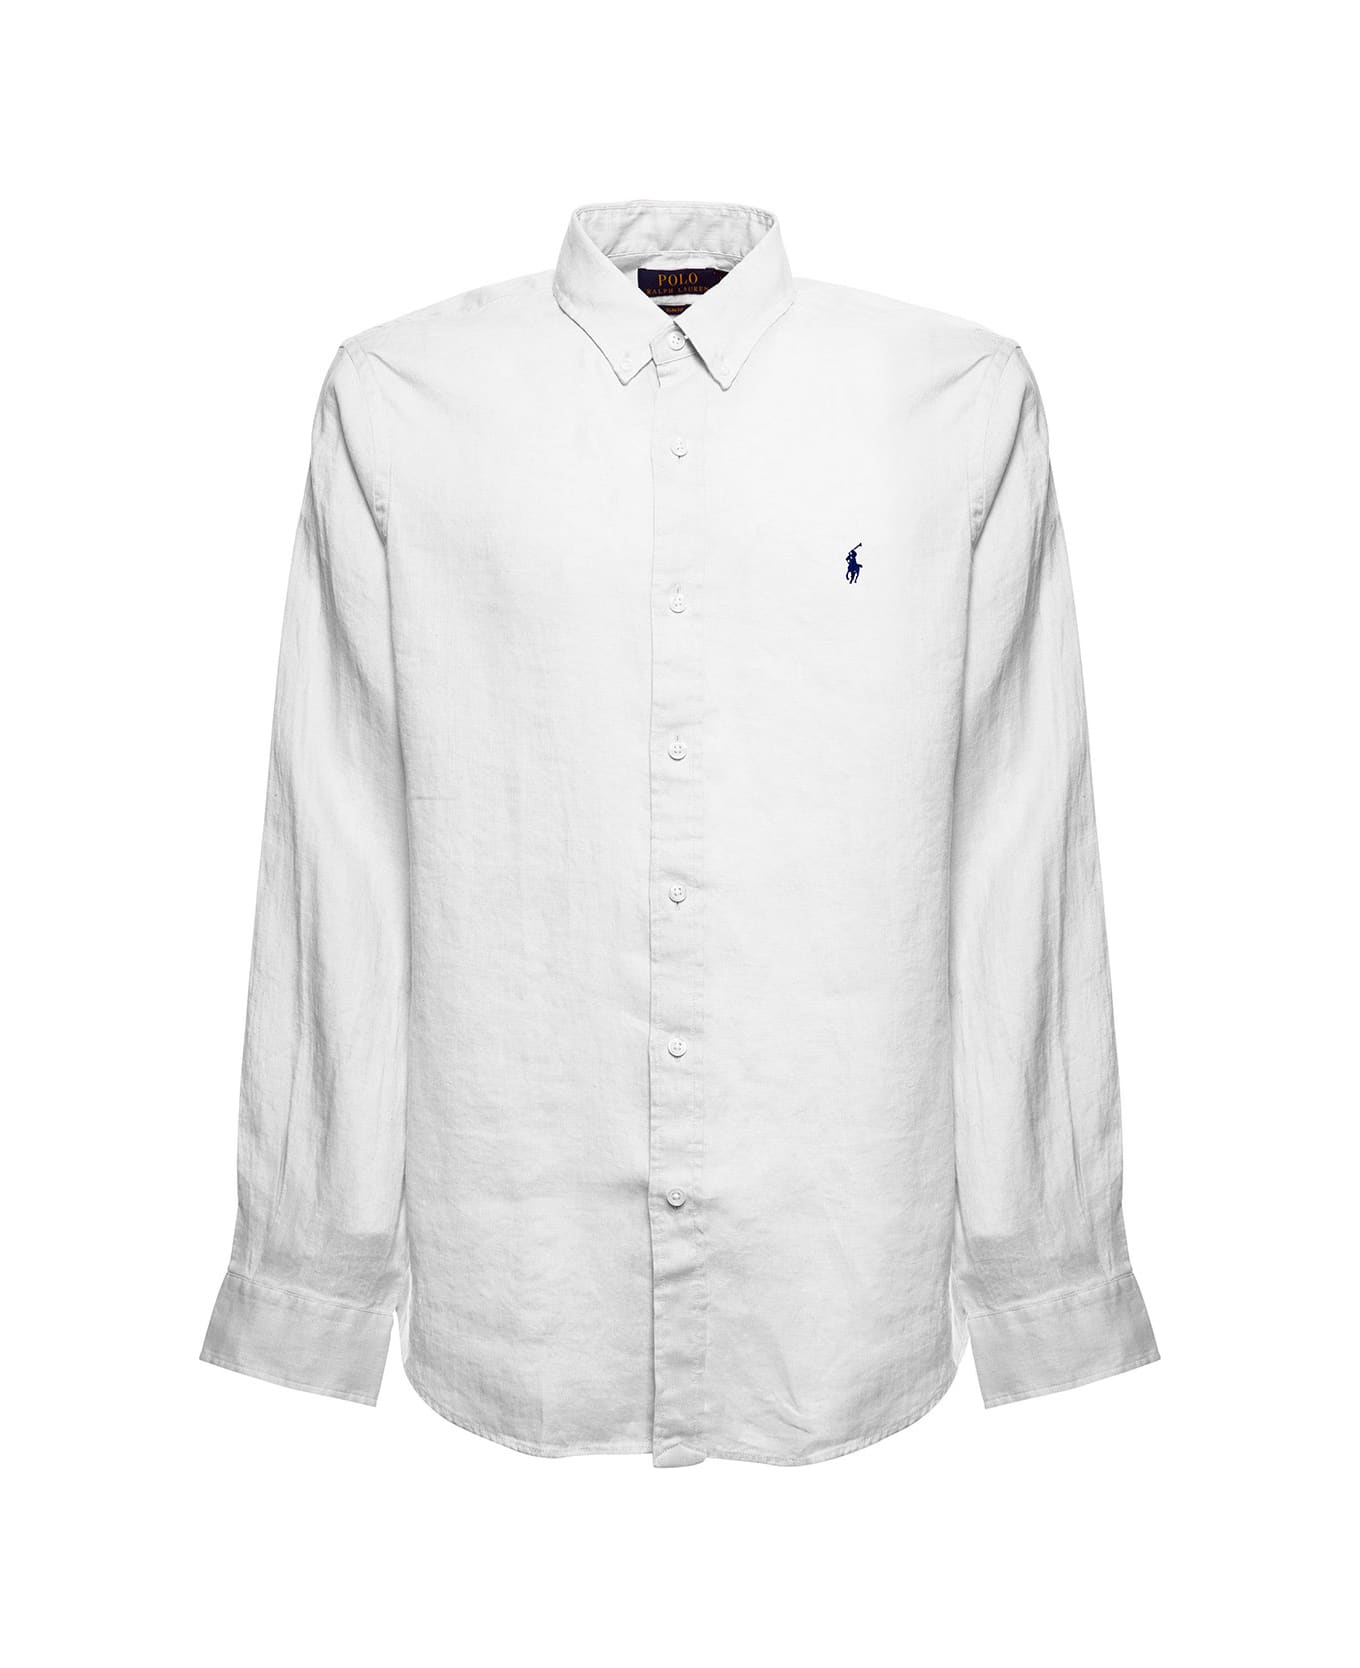 Ralph Lauren Man 's White Linen Shirt With Logo - WHITE